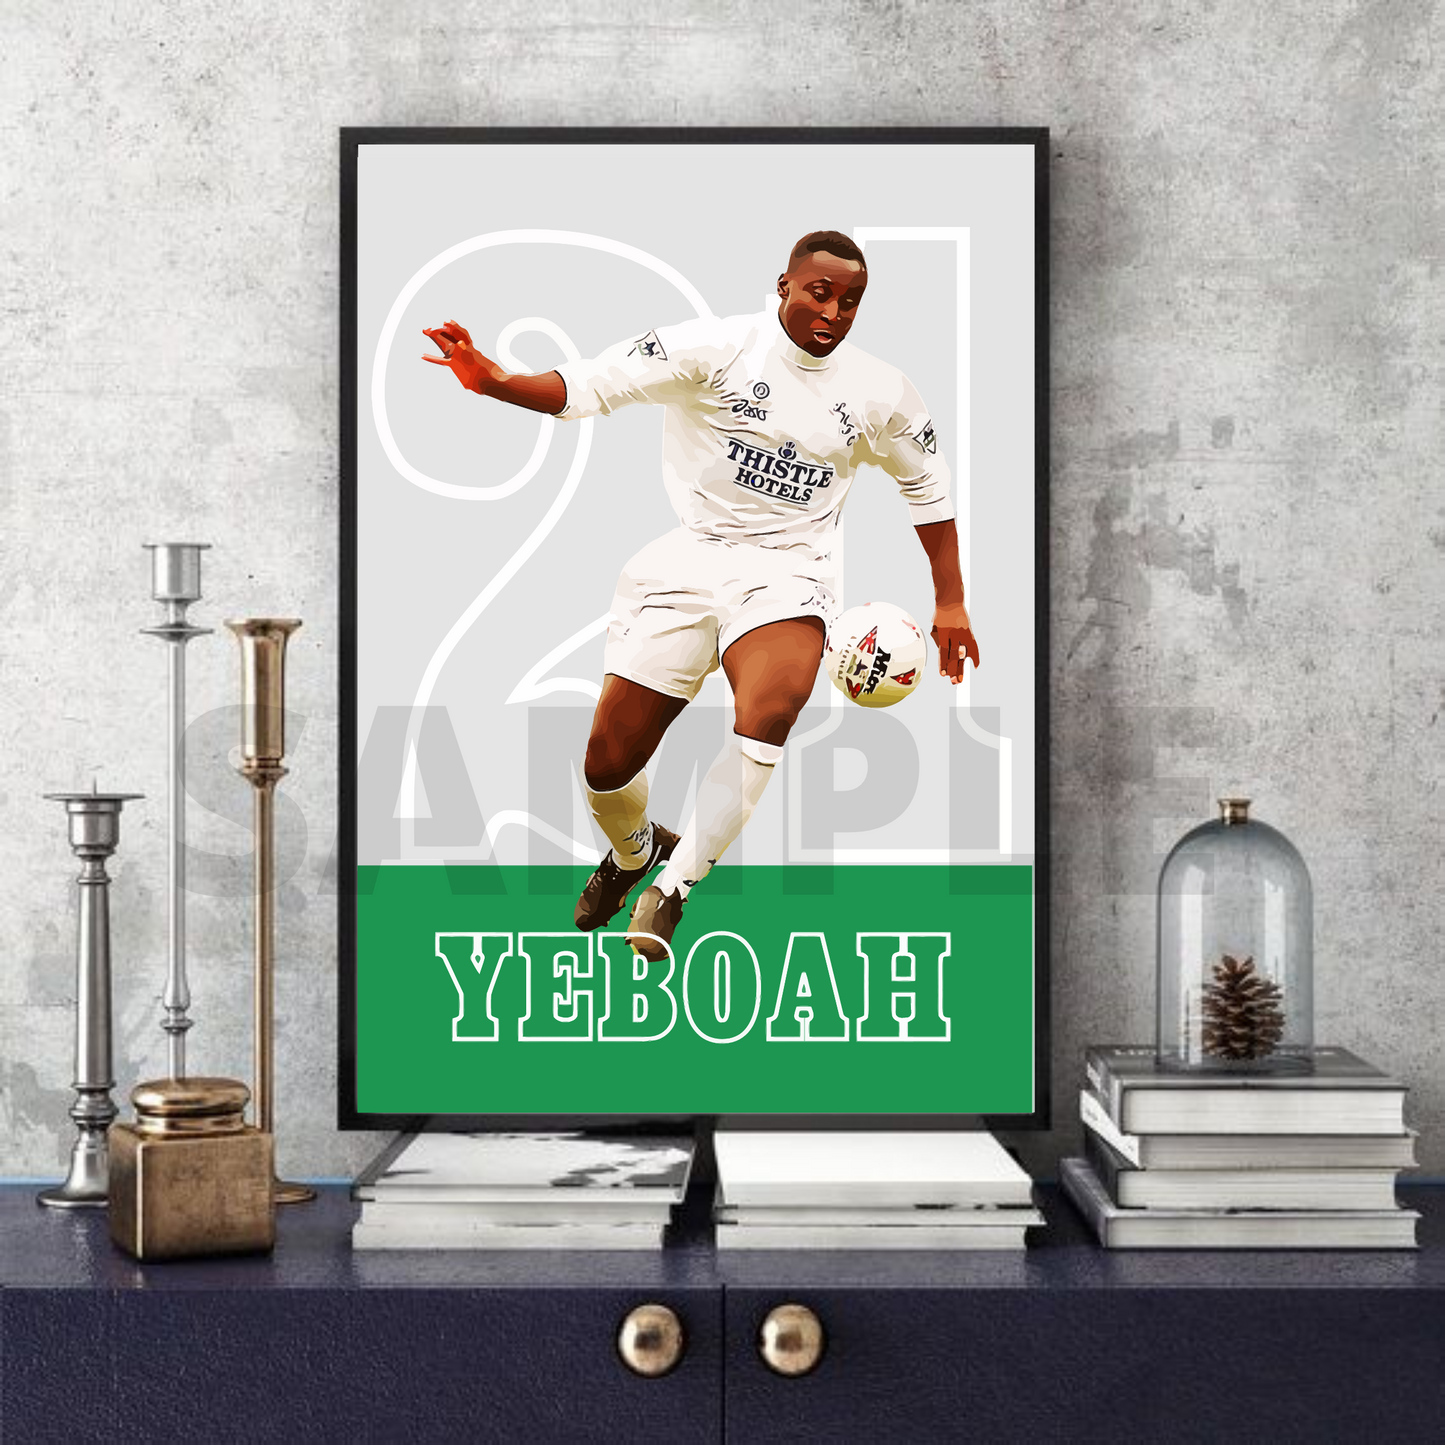 Tony Yeboah (2) - Leeds United legend Football print/poster collectable/gift/memorabilia